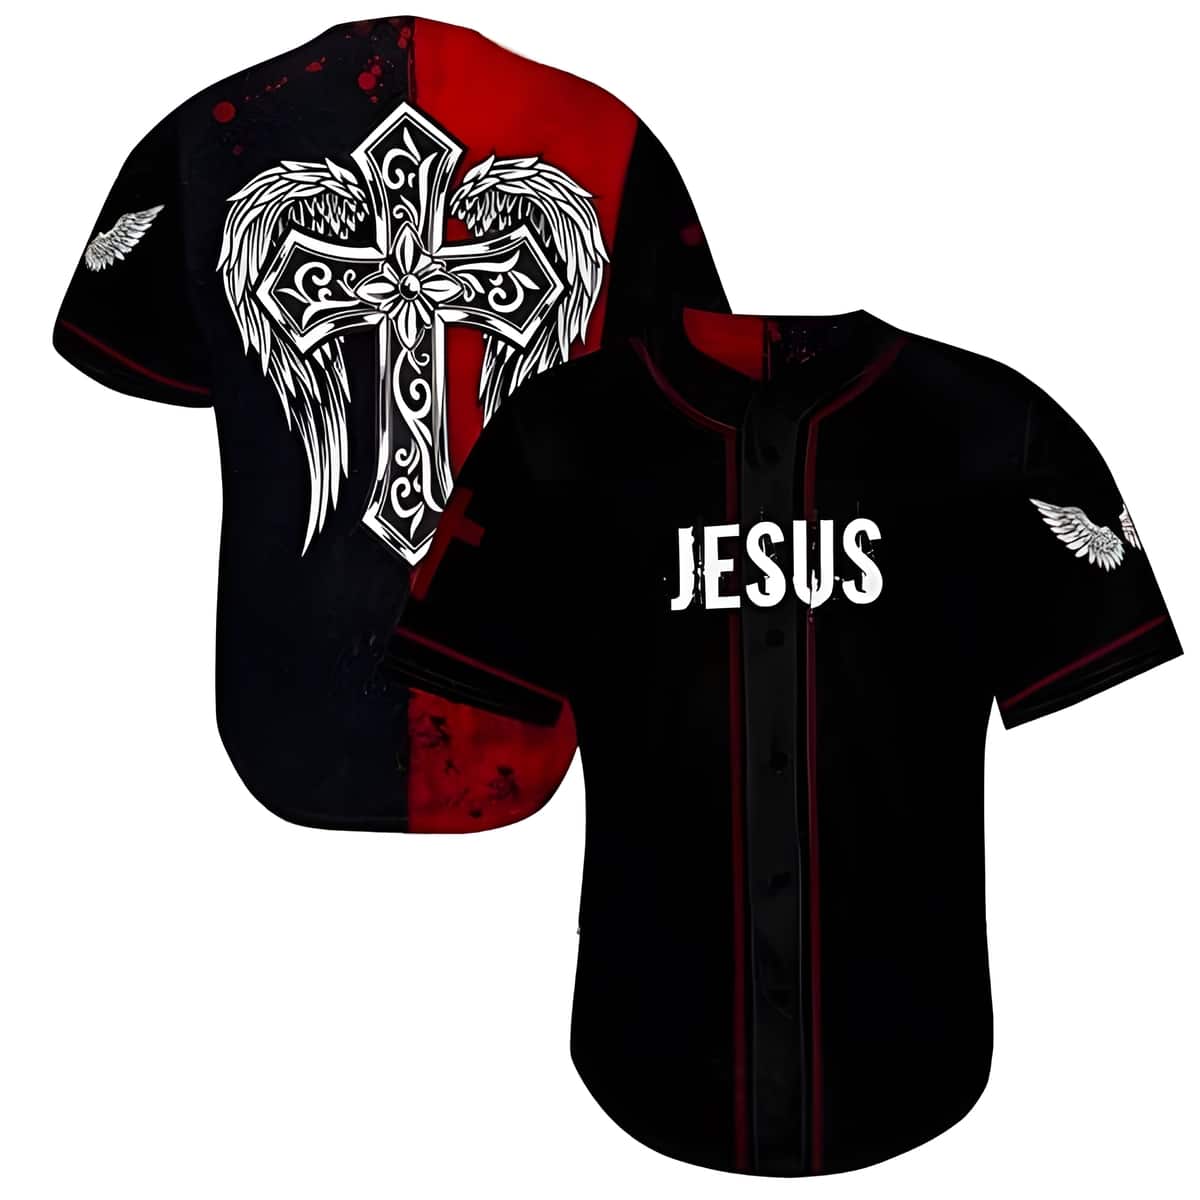 Faith Cross Wing Of Jesus Baseball Jersey Religious Gift For Christian Friend